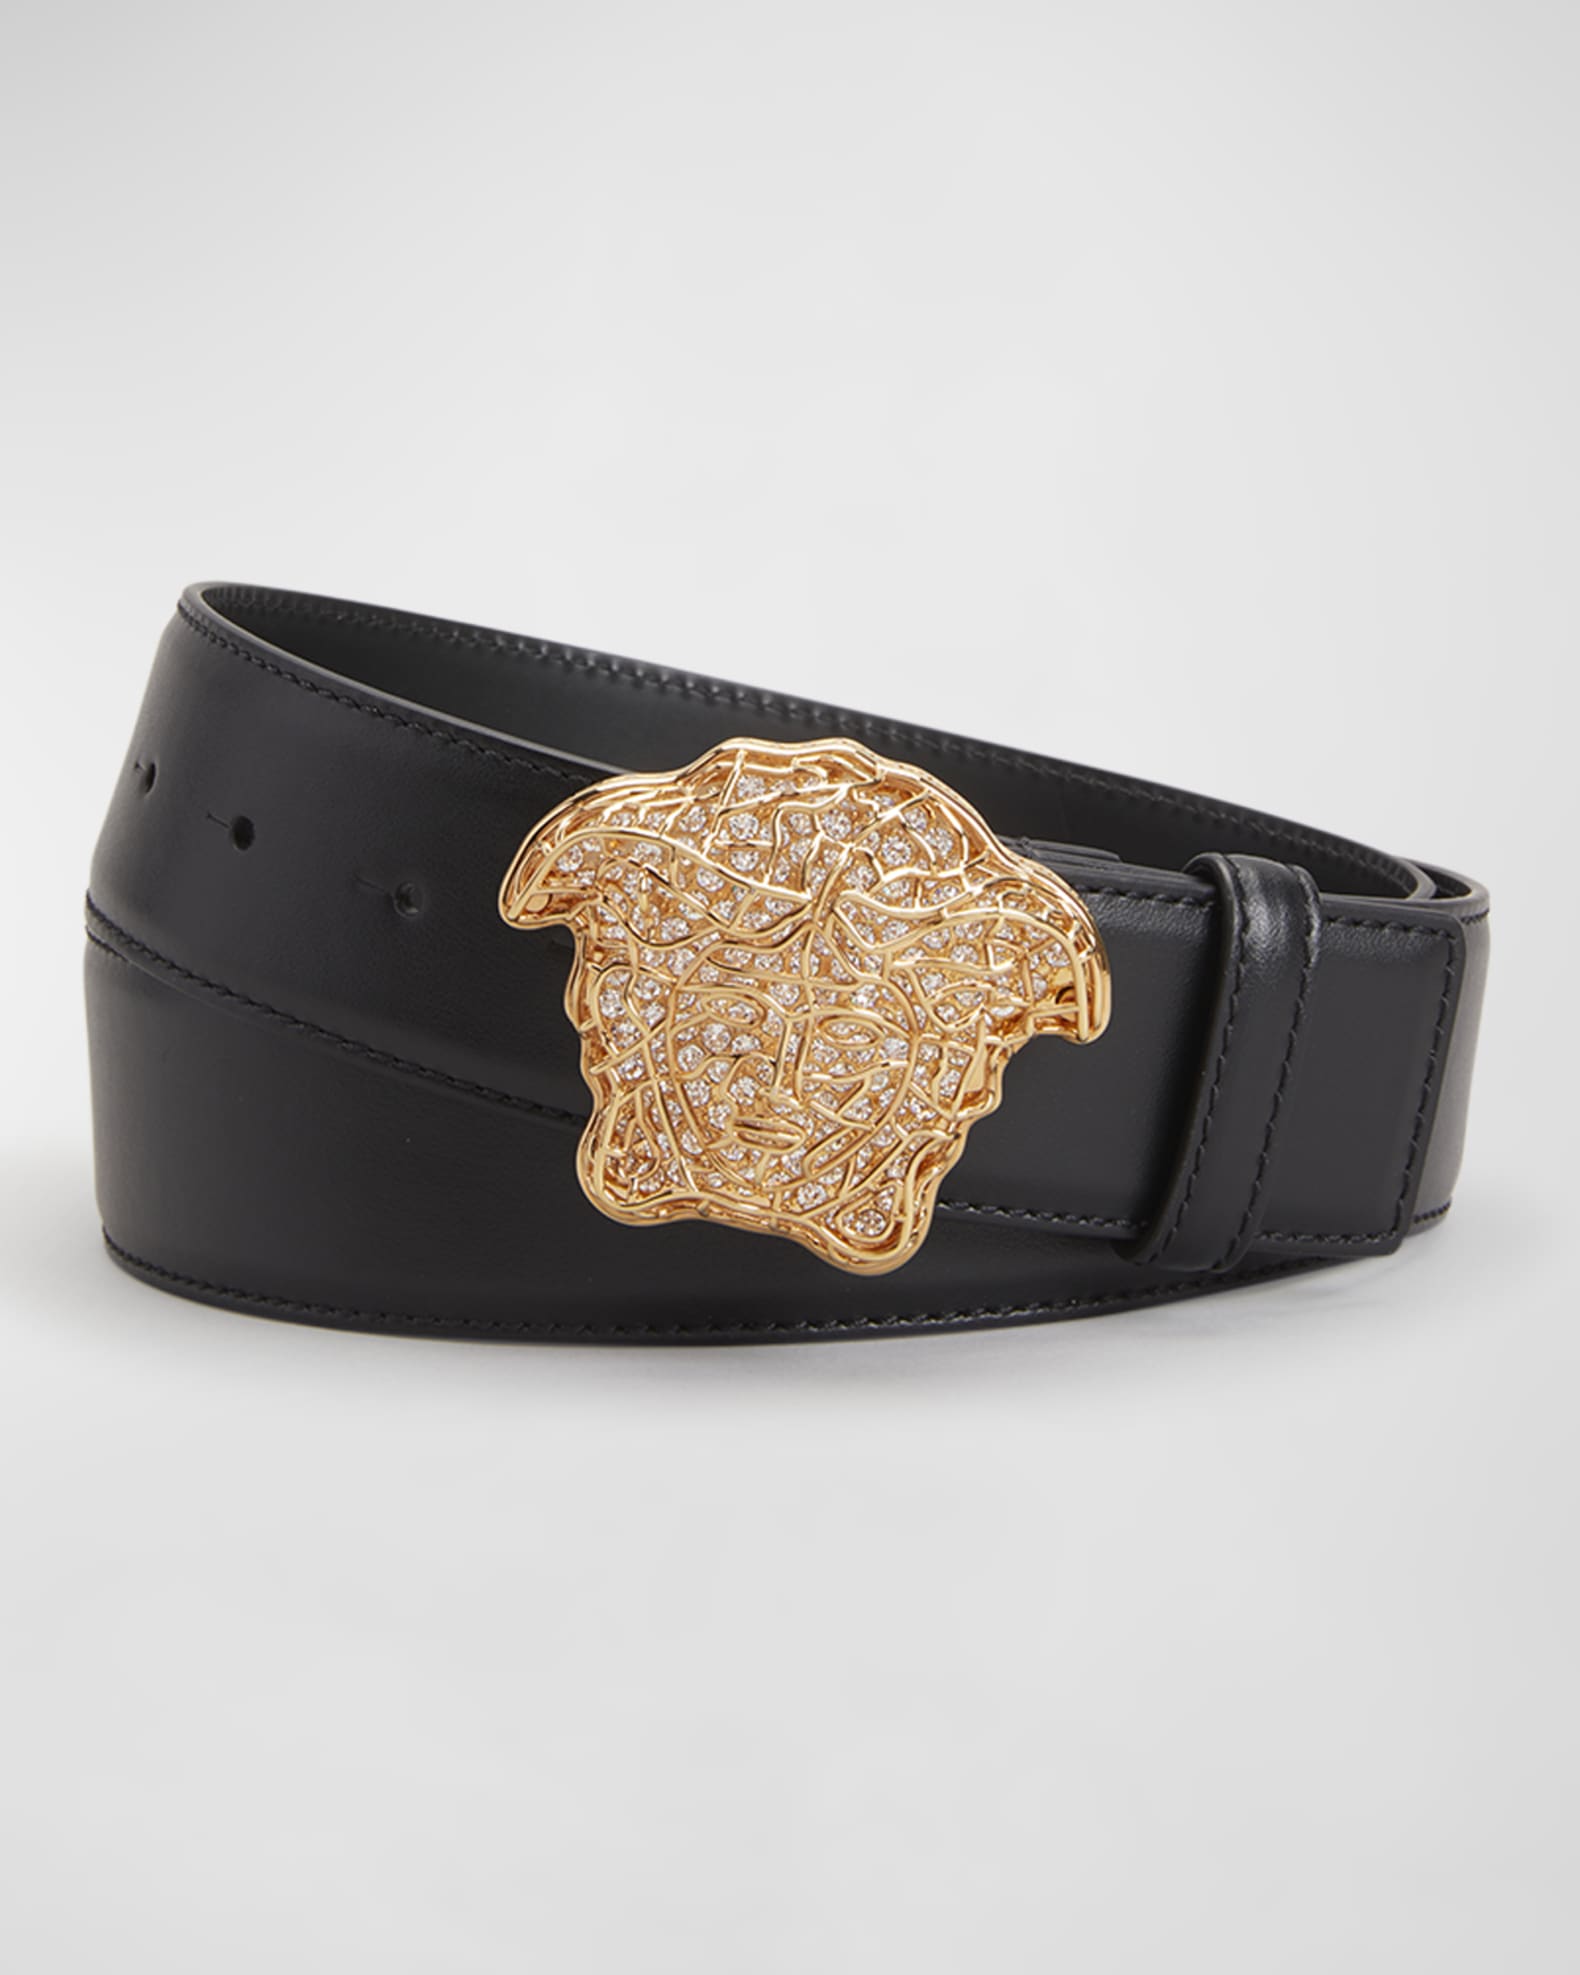 Versace Men's Crystal Medusa Head Cutout Leather Belt, Blackversace Gold, Men's, 44in / 110cm, Belts Leather Belts